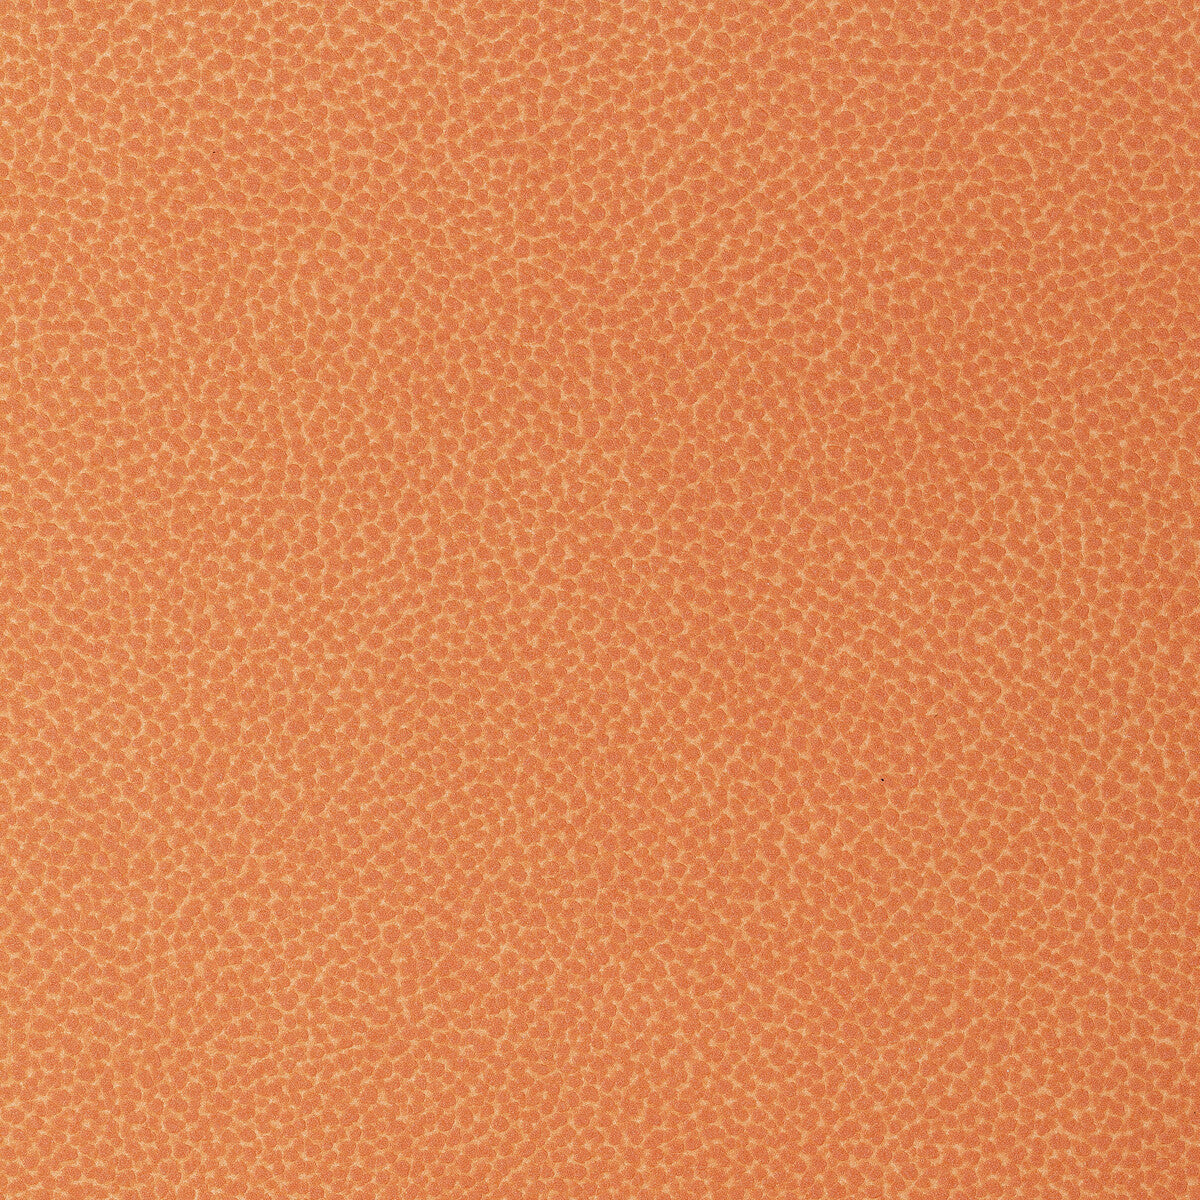 Kravet Design fabric in sweetgum-12 color - pattern SWEETGUM.12.0 - by Kravet Design